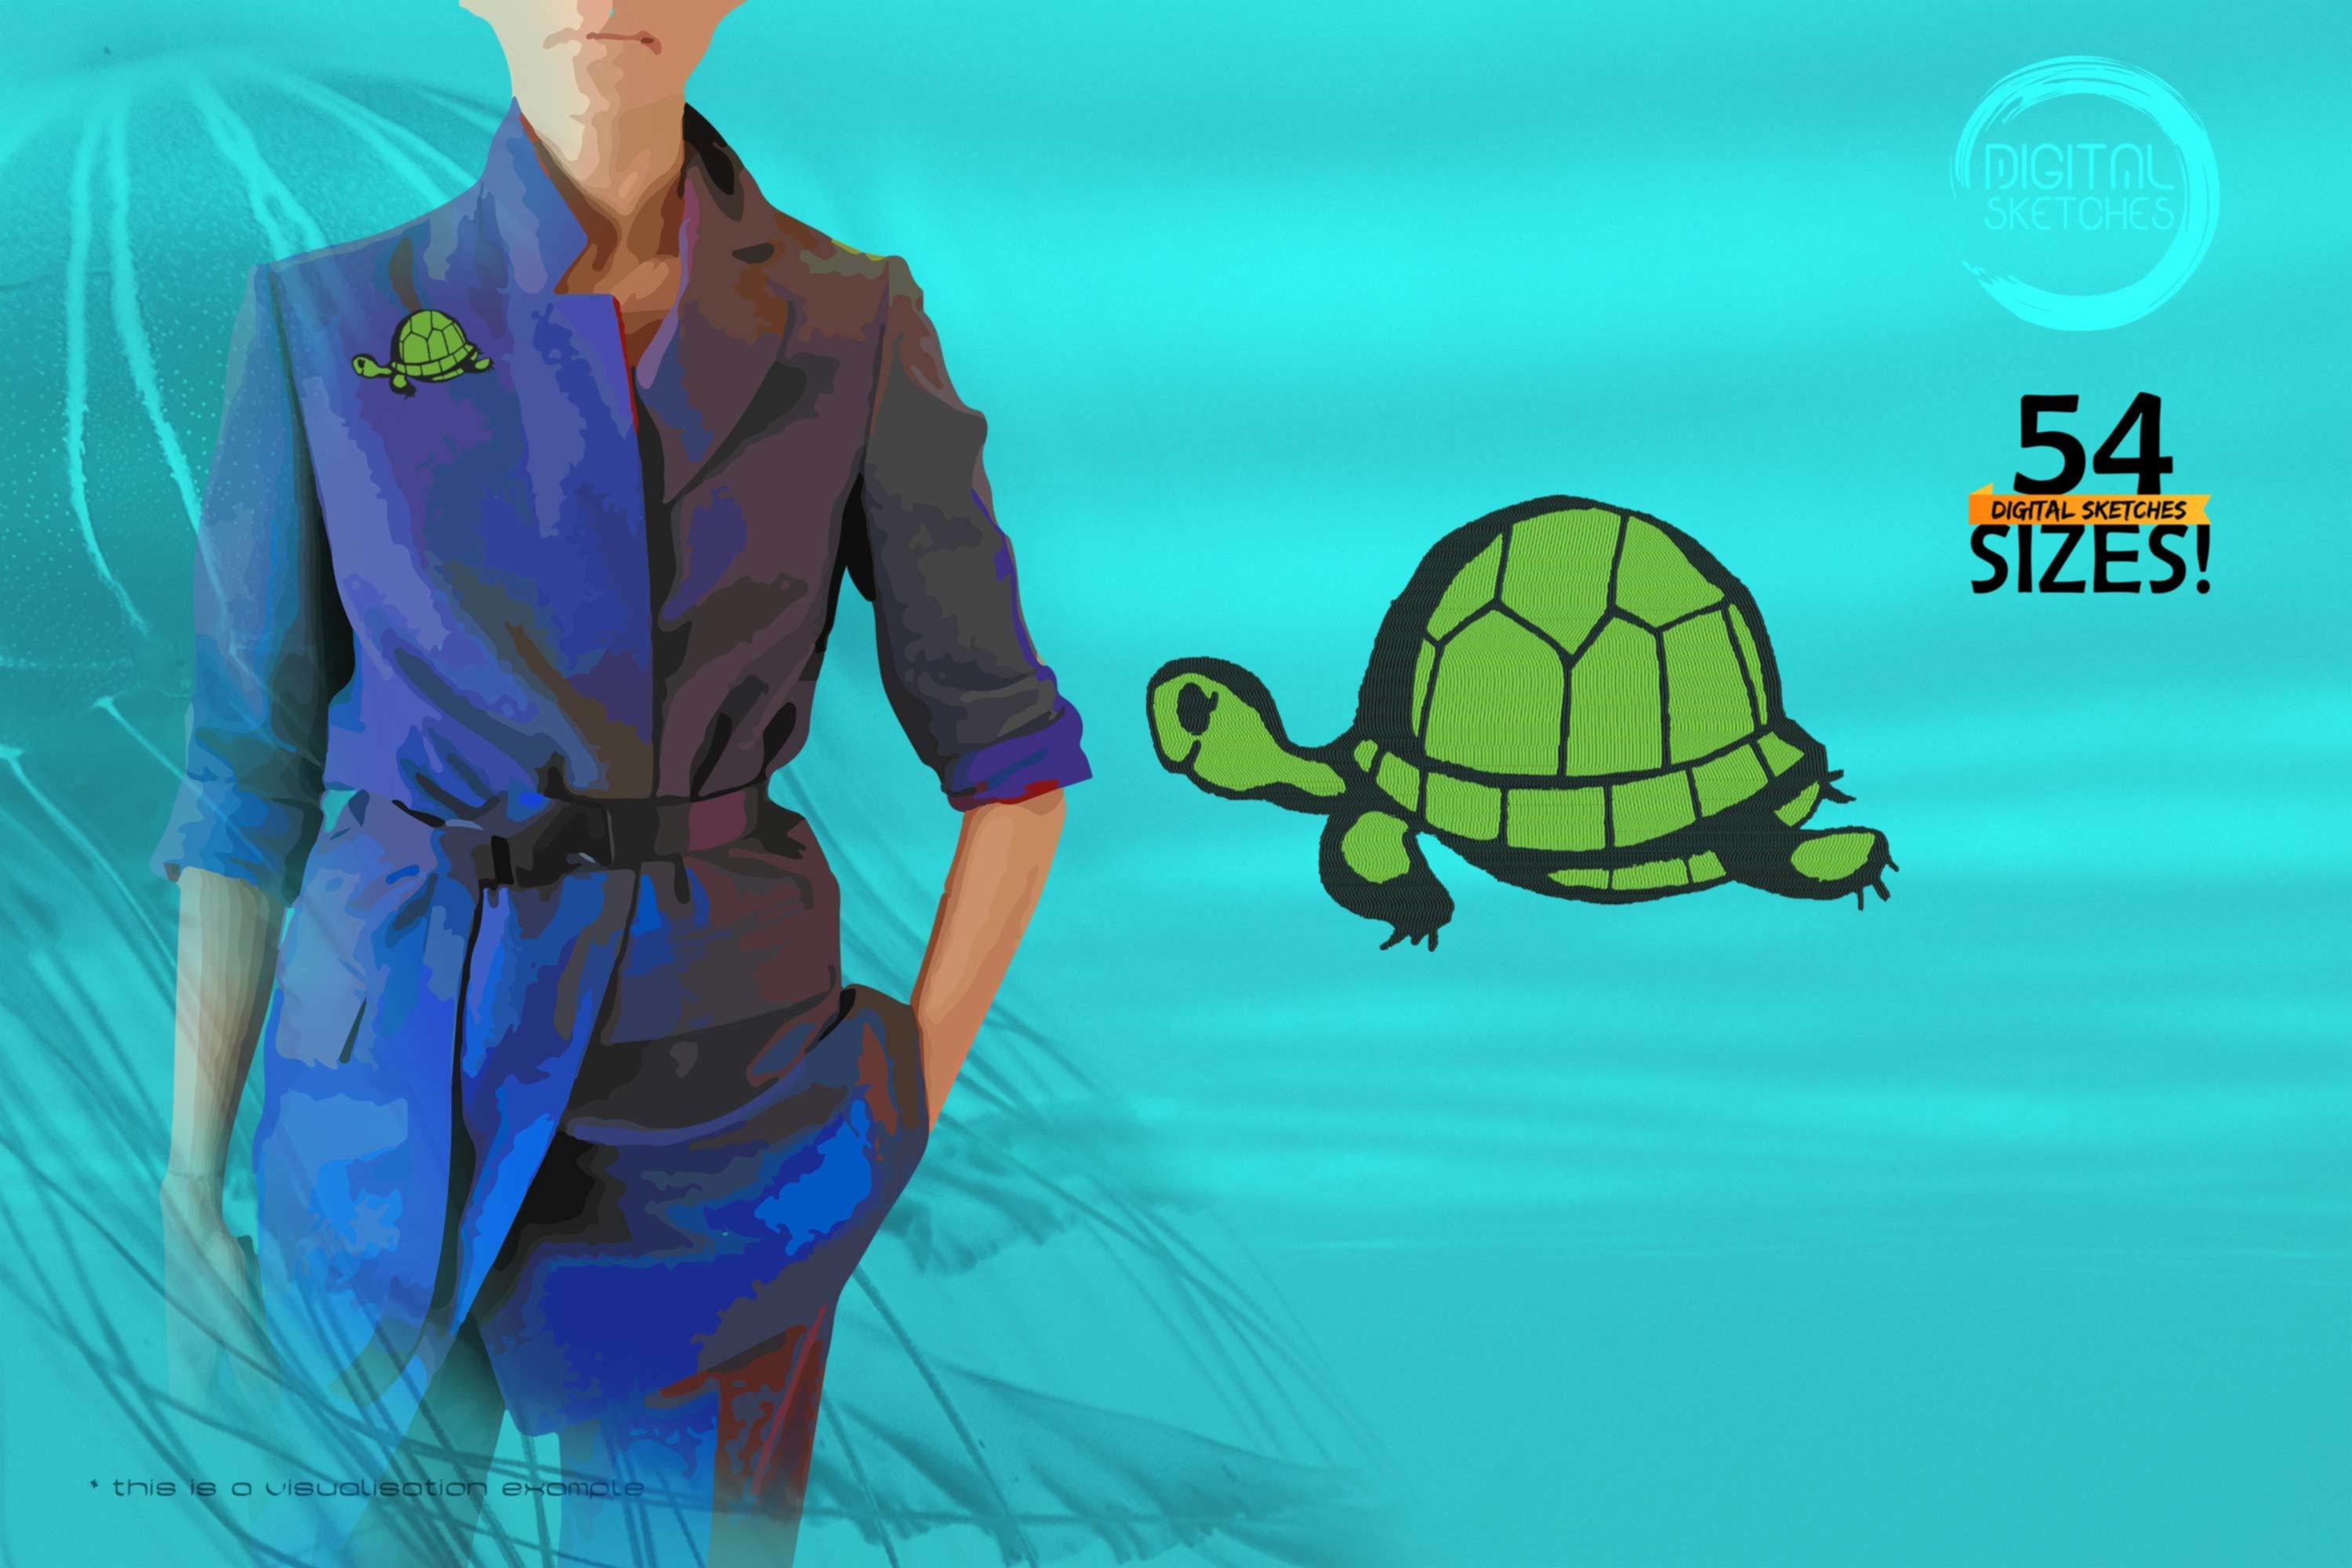 Hand-Drawn Turtle